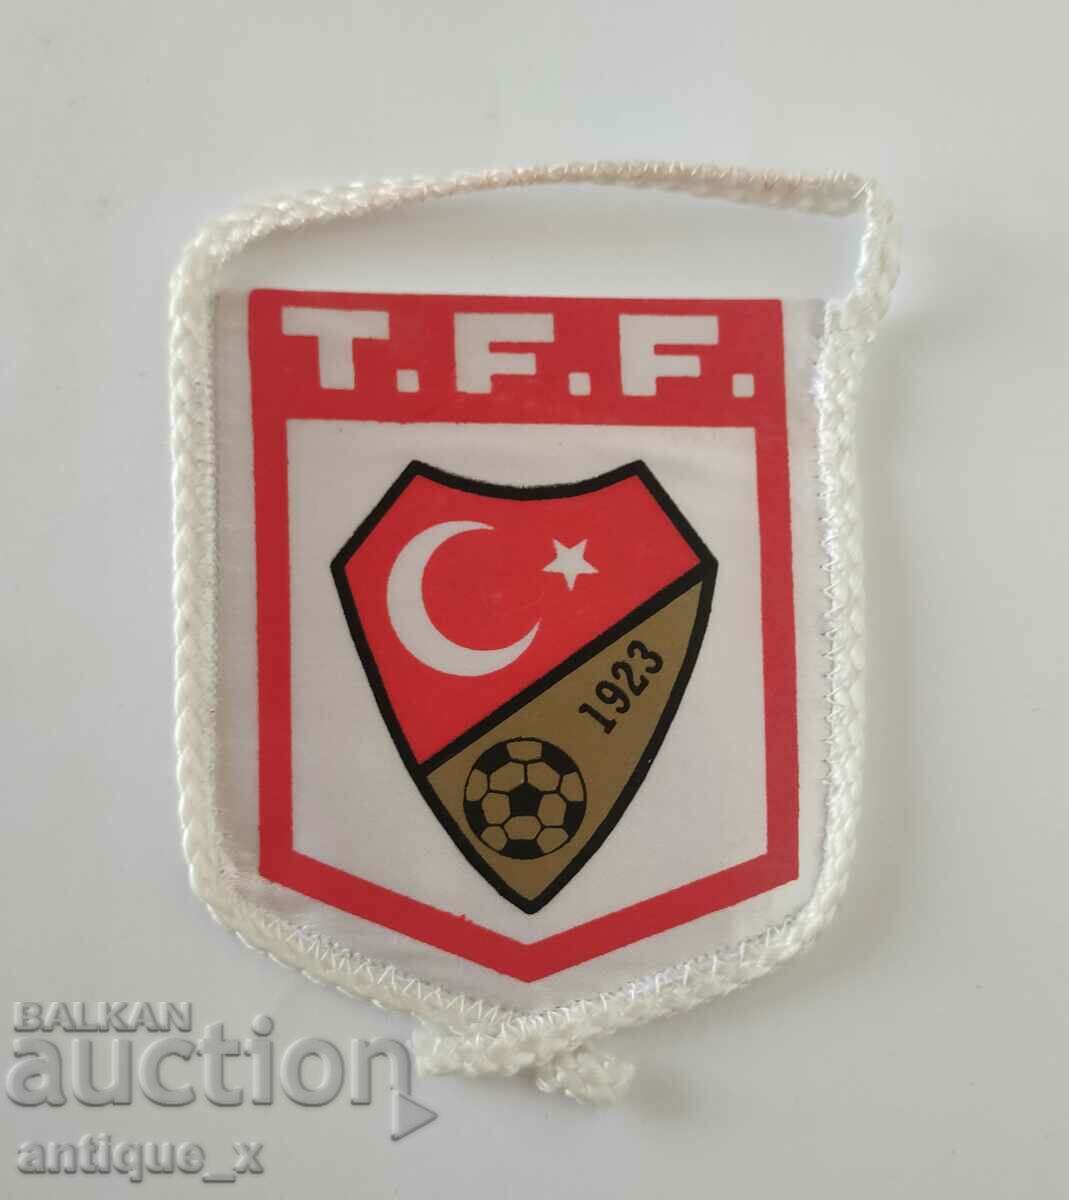 Steagul vechi de fotbal - Federația de Fotbal Tours - TFF